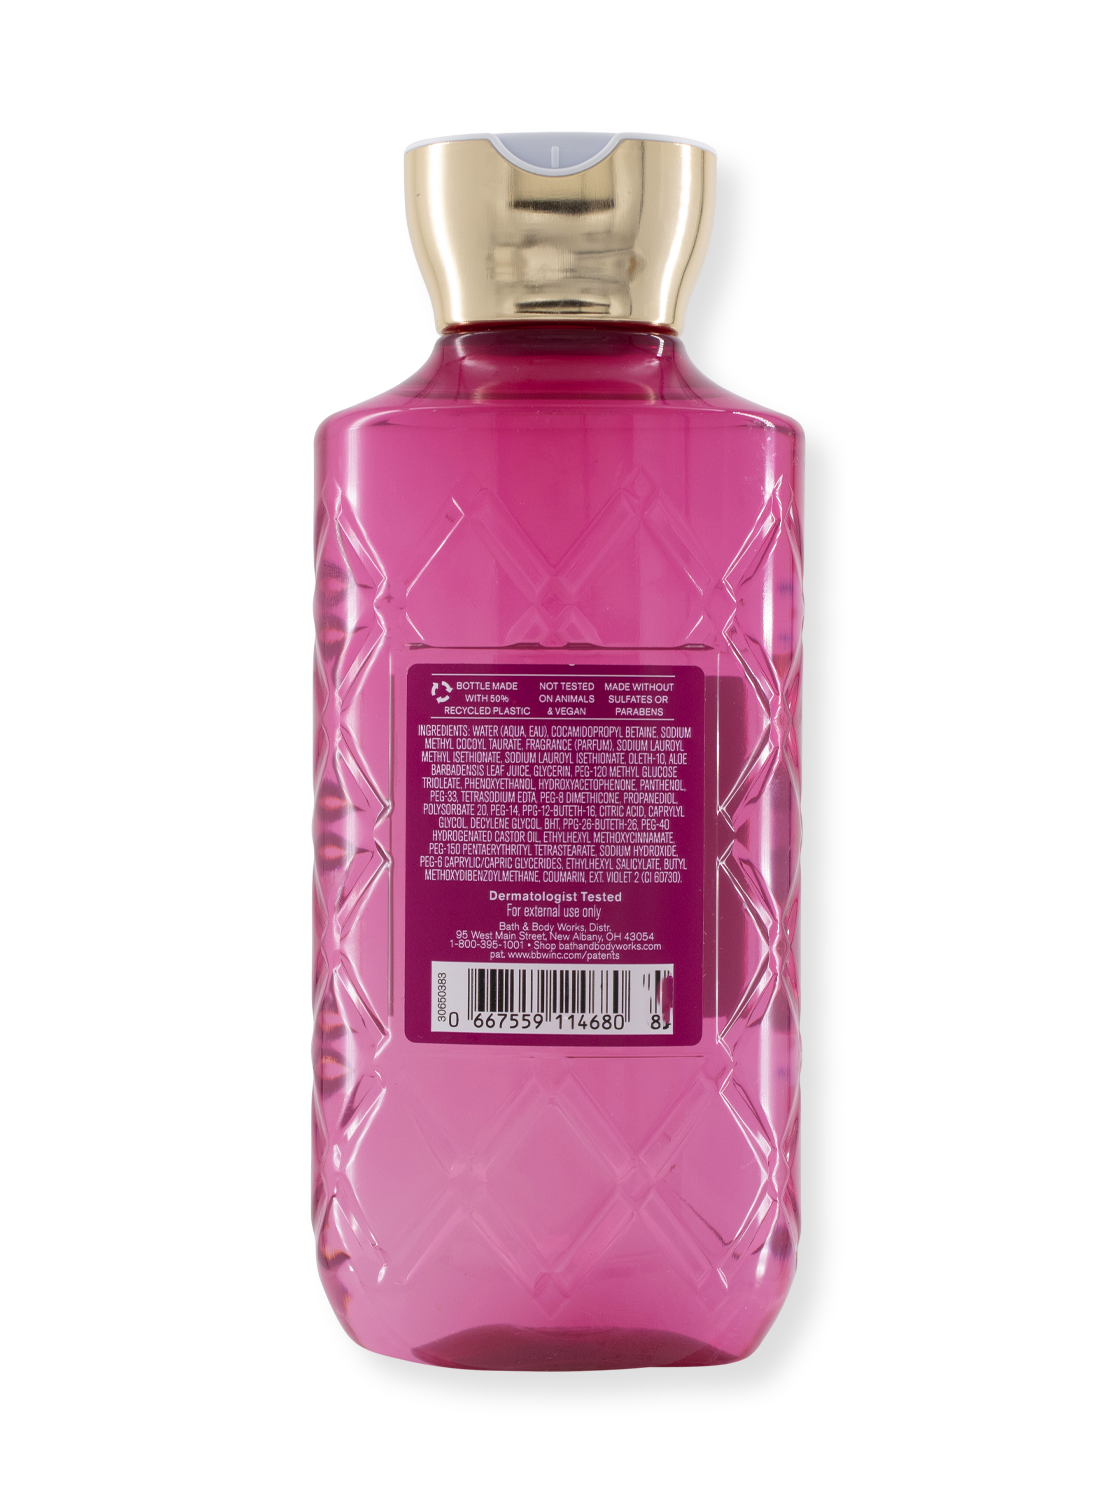 Shower gel/Body Wash - Bourbon Strawberry & Vanilla - 295ml